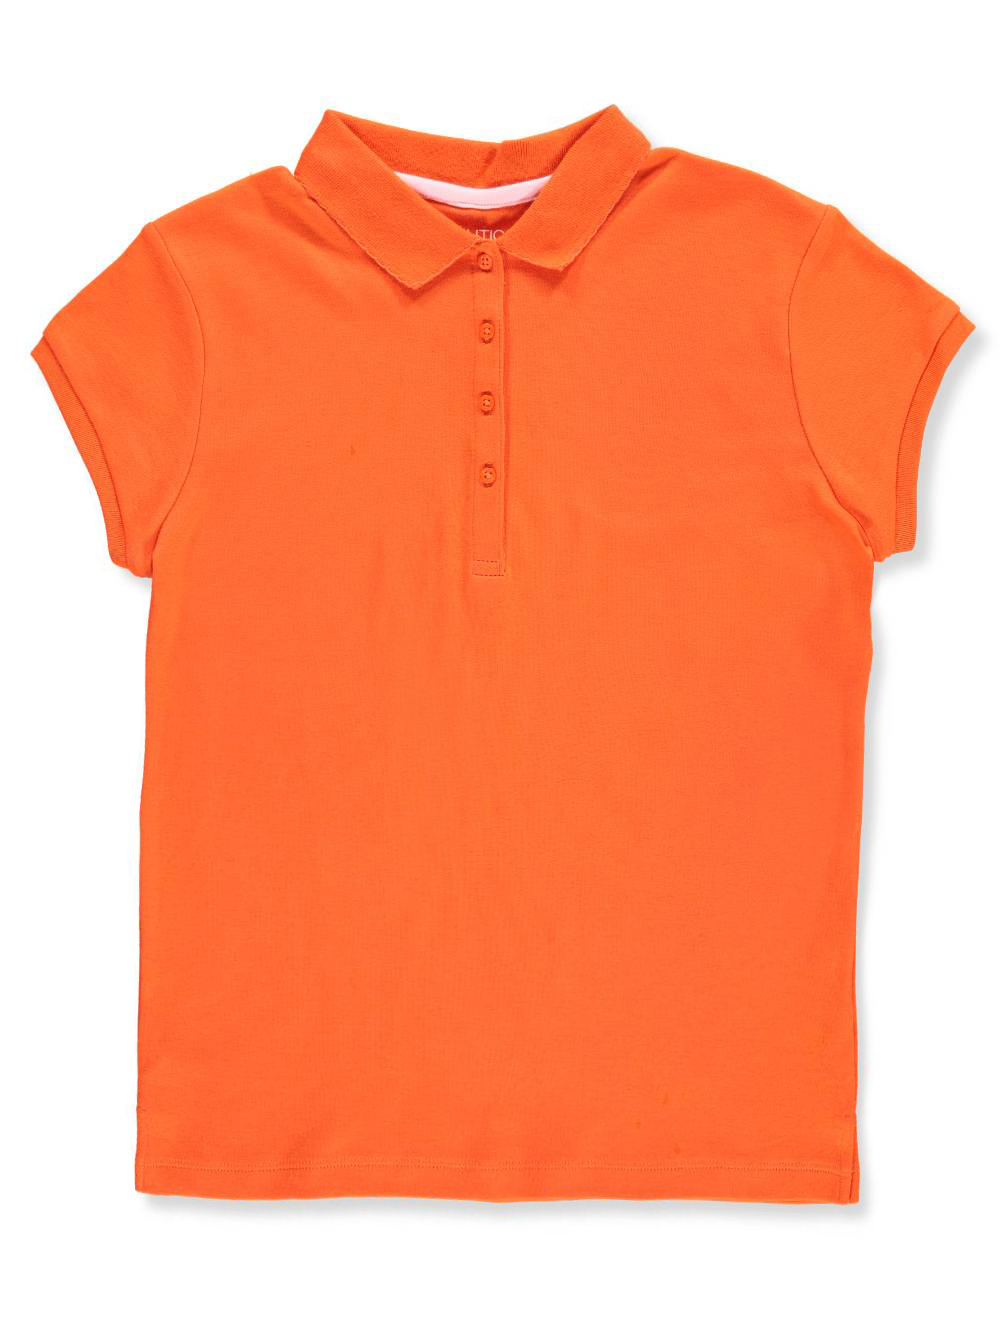 Orange Knit Tops